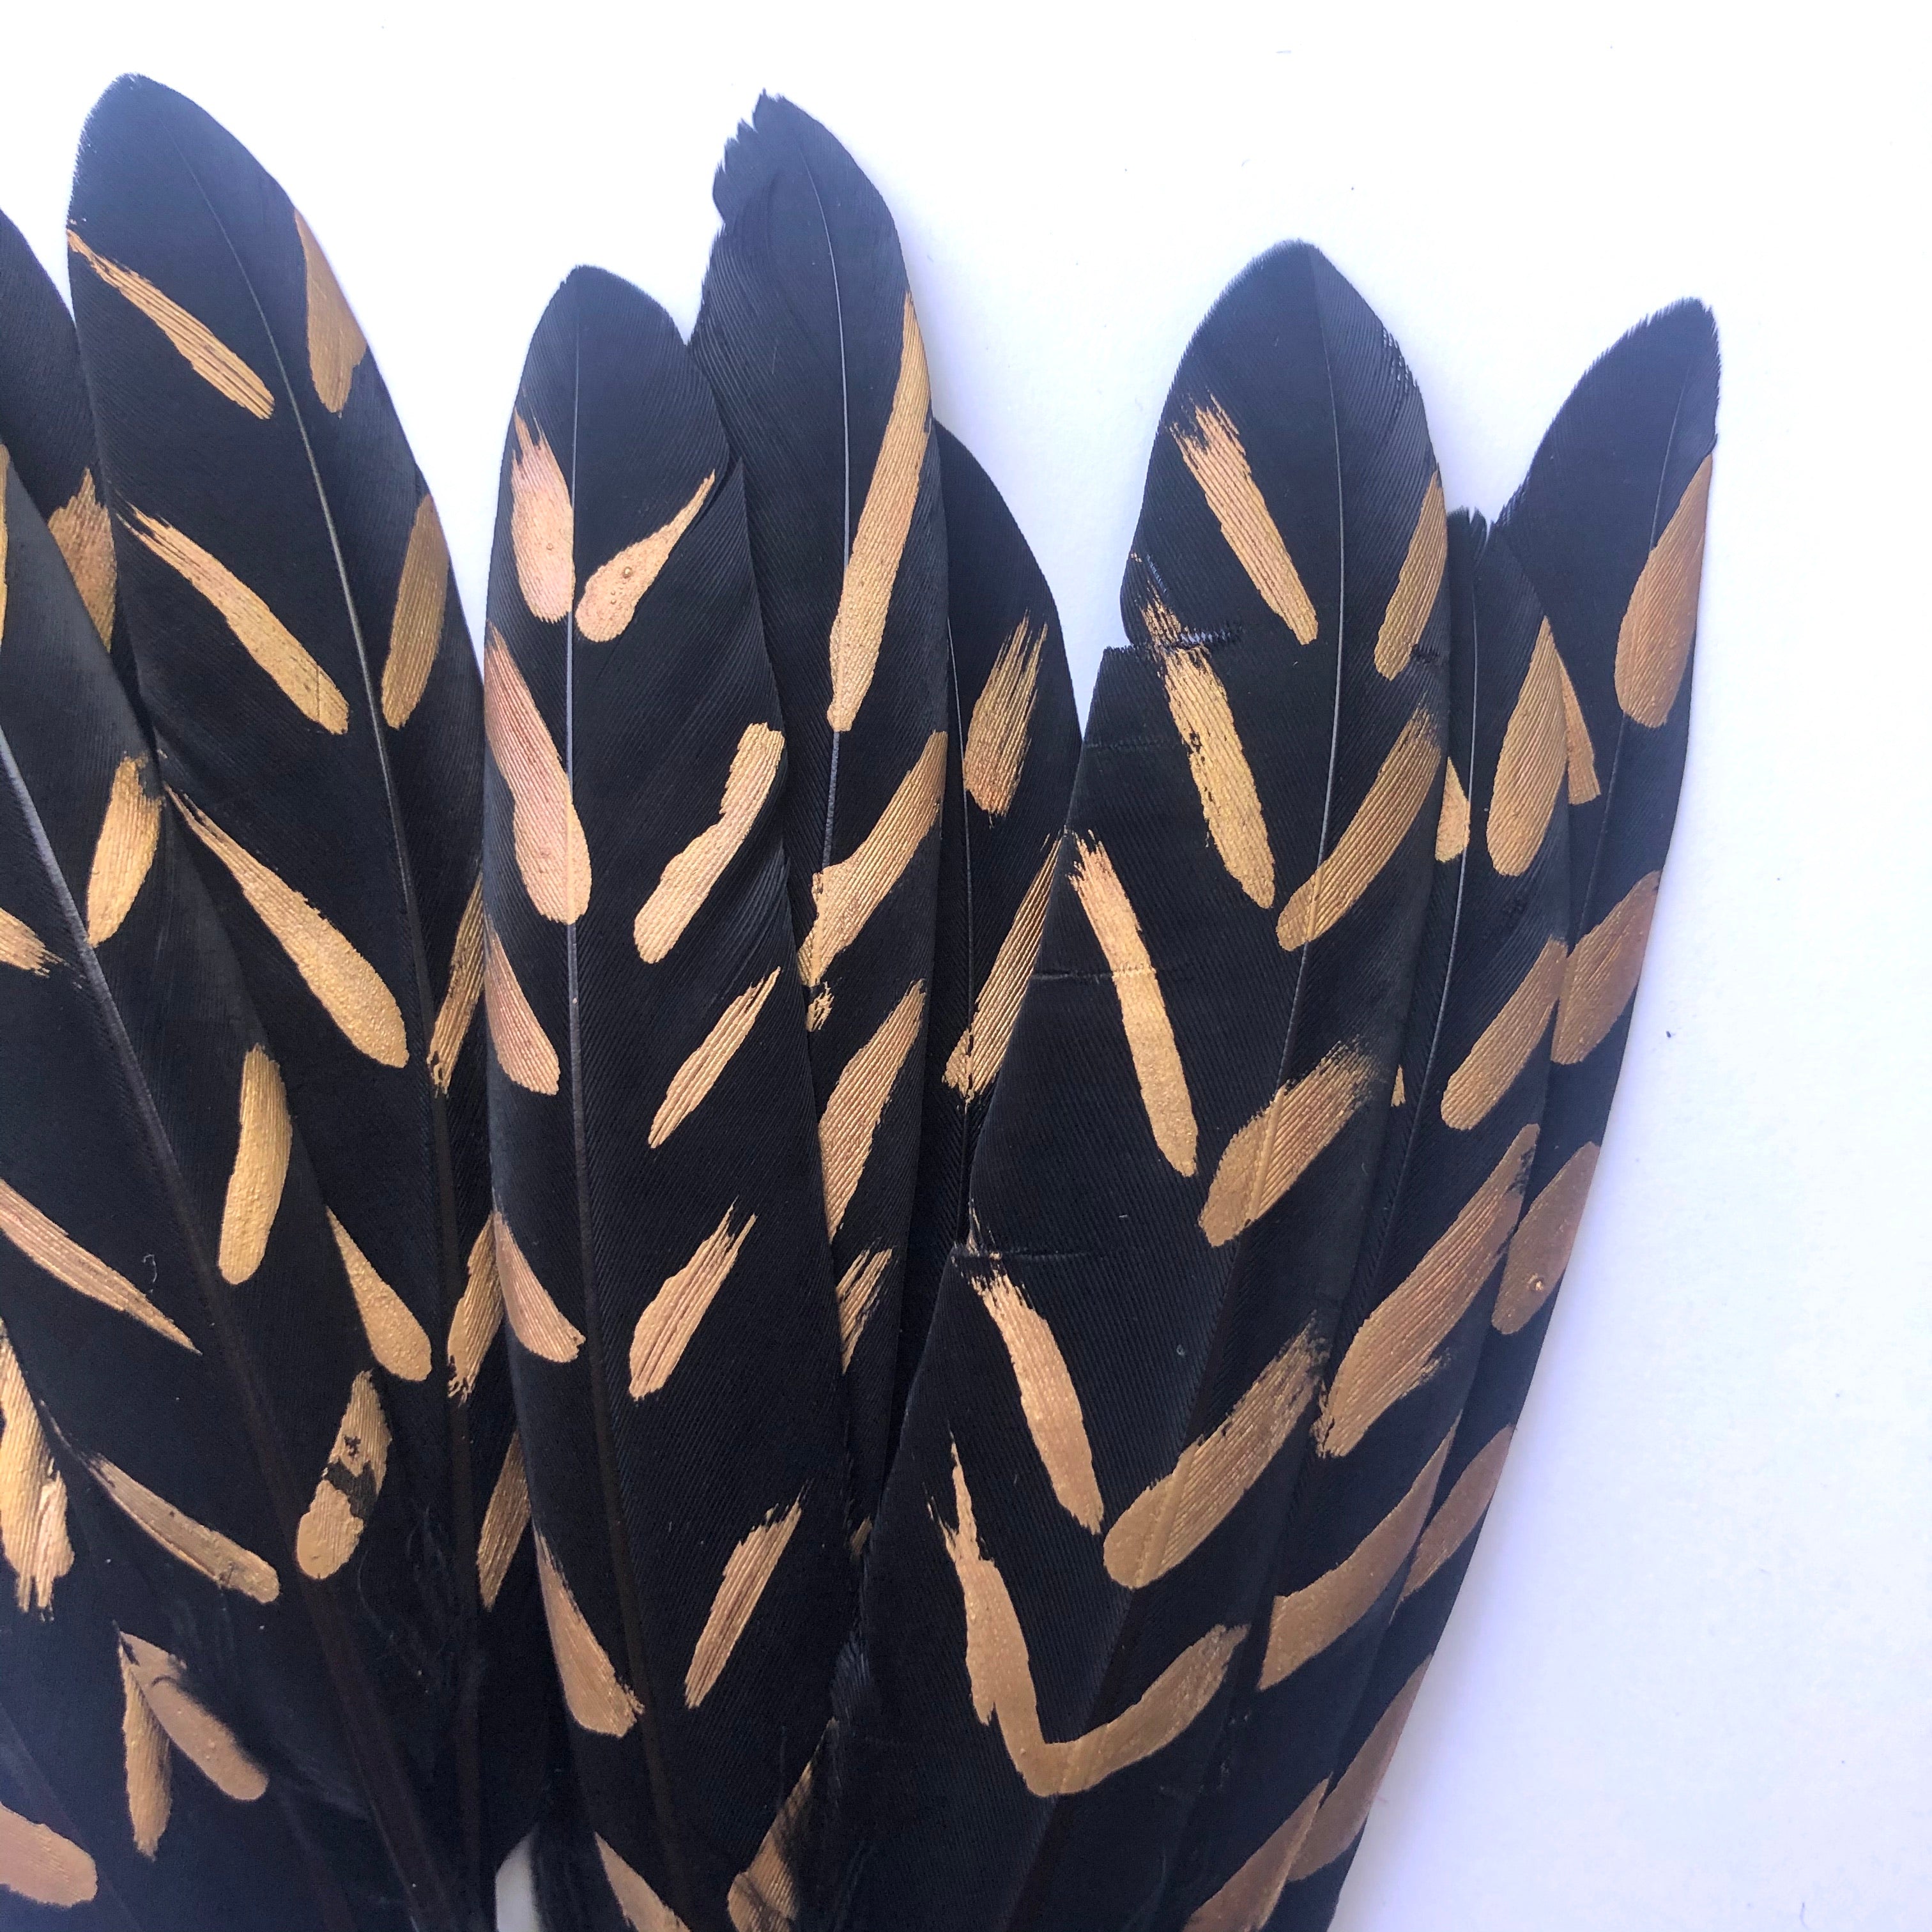 Tiny Goose Pointer Printed Black Feather Art Craft - Metallic Gold Stripe Style 7 x 10 pcs